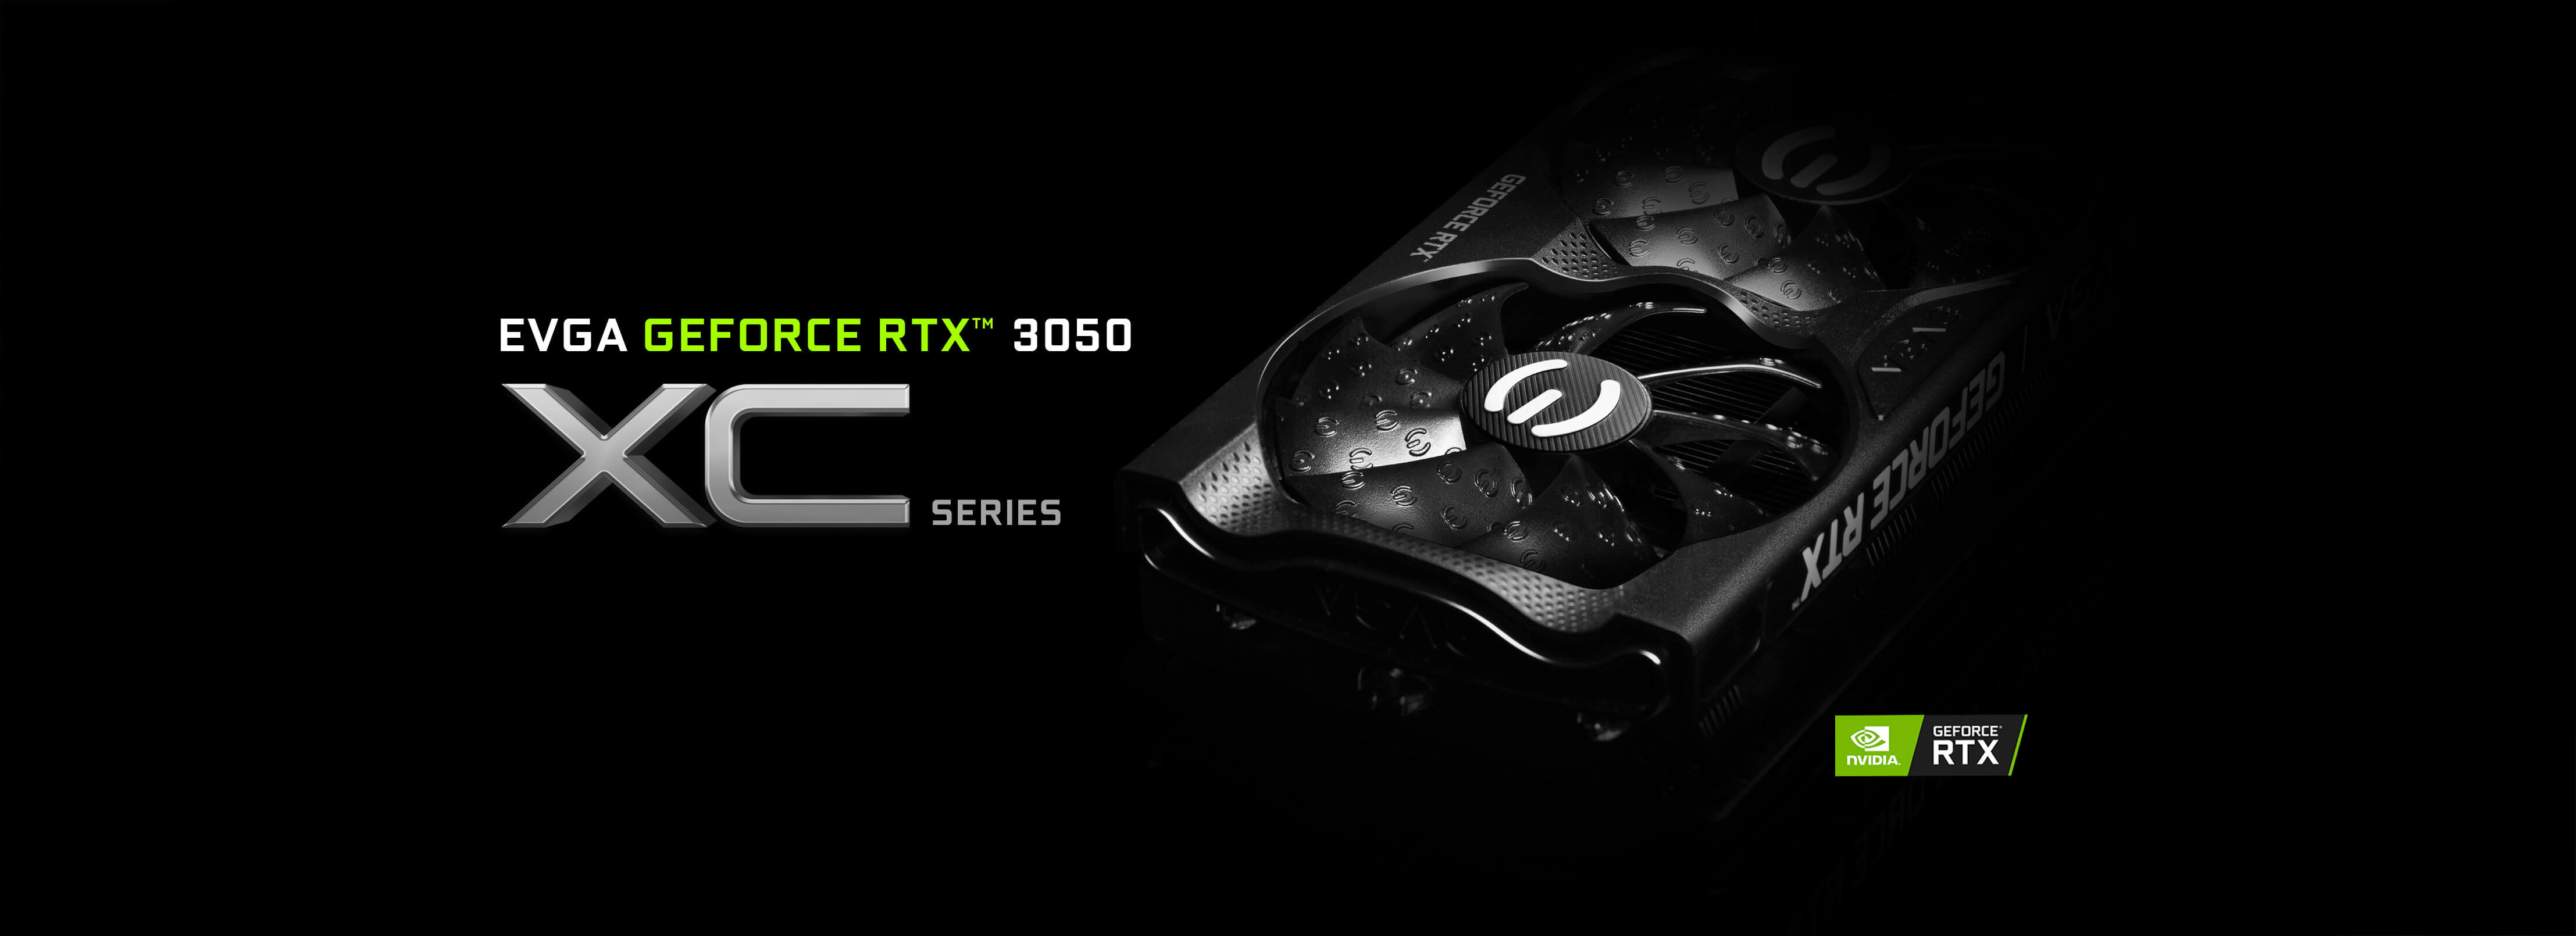 EVGA GeForce RTX™ 3050